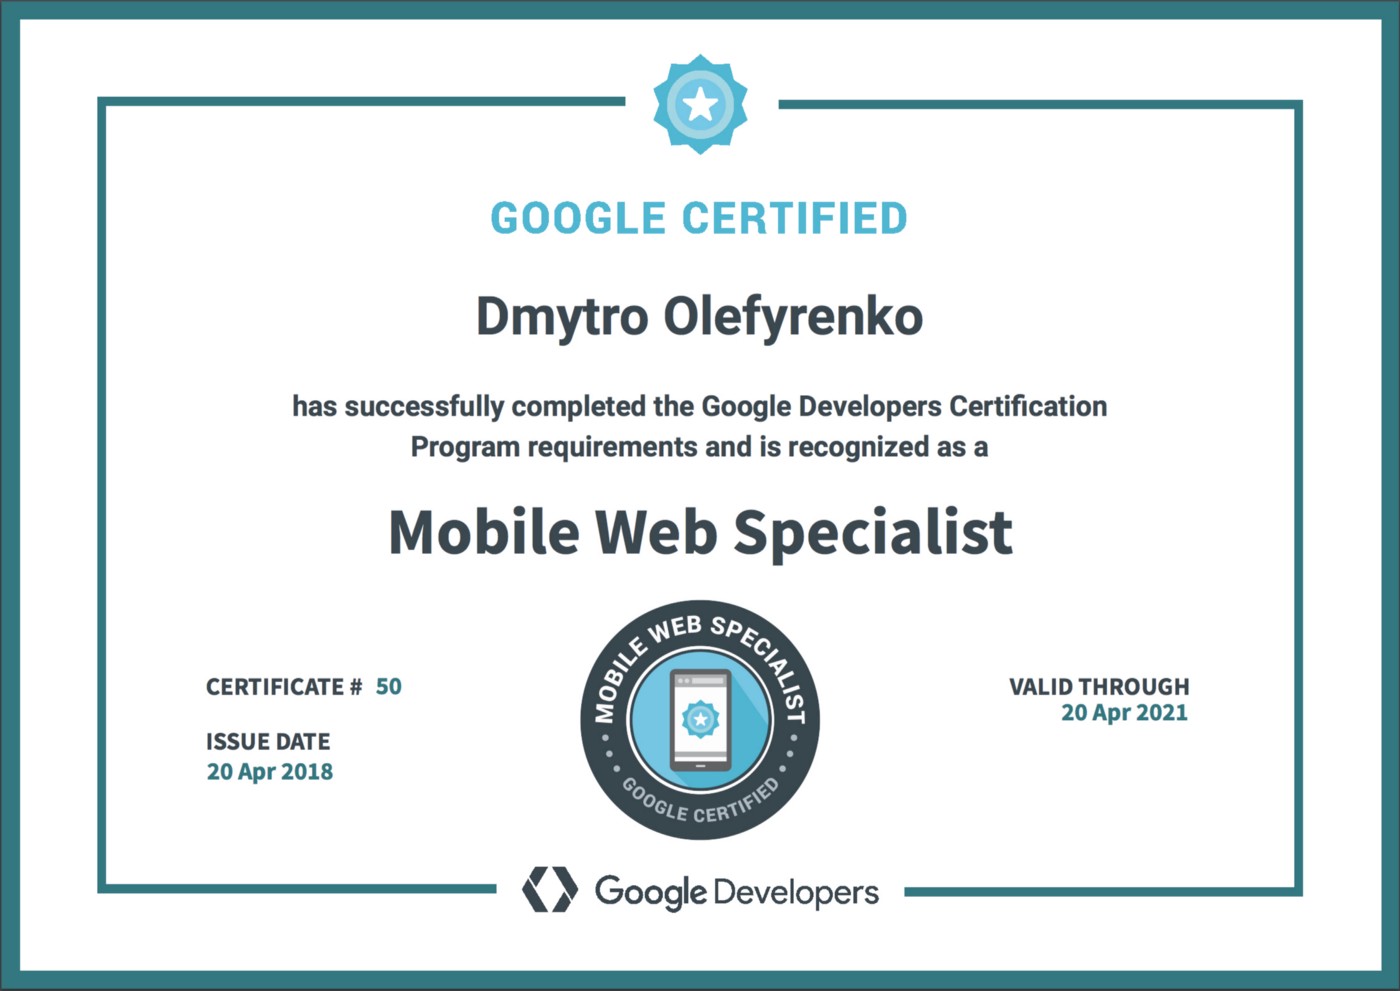 Google Certified Mobile Web Specialist